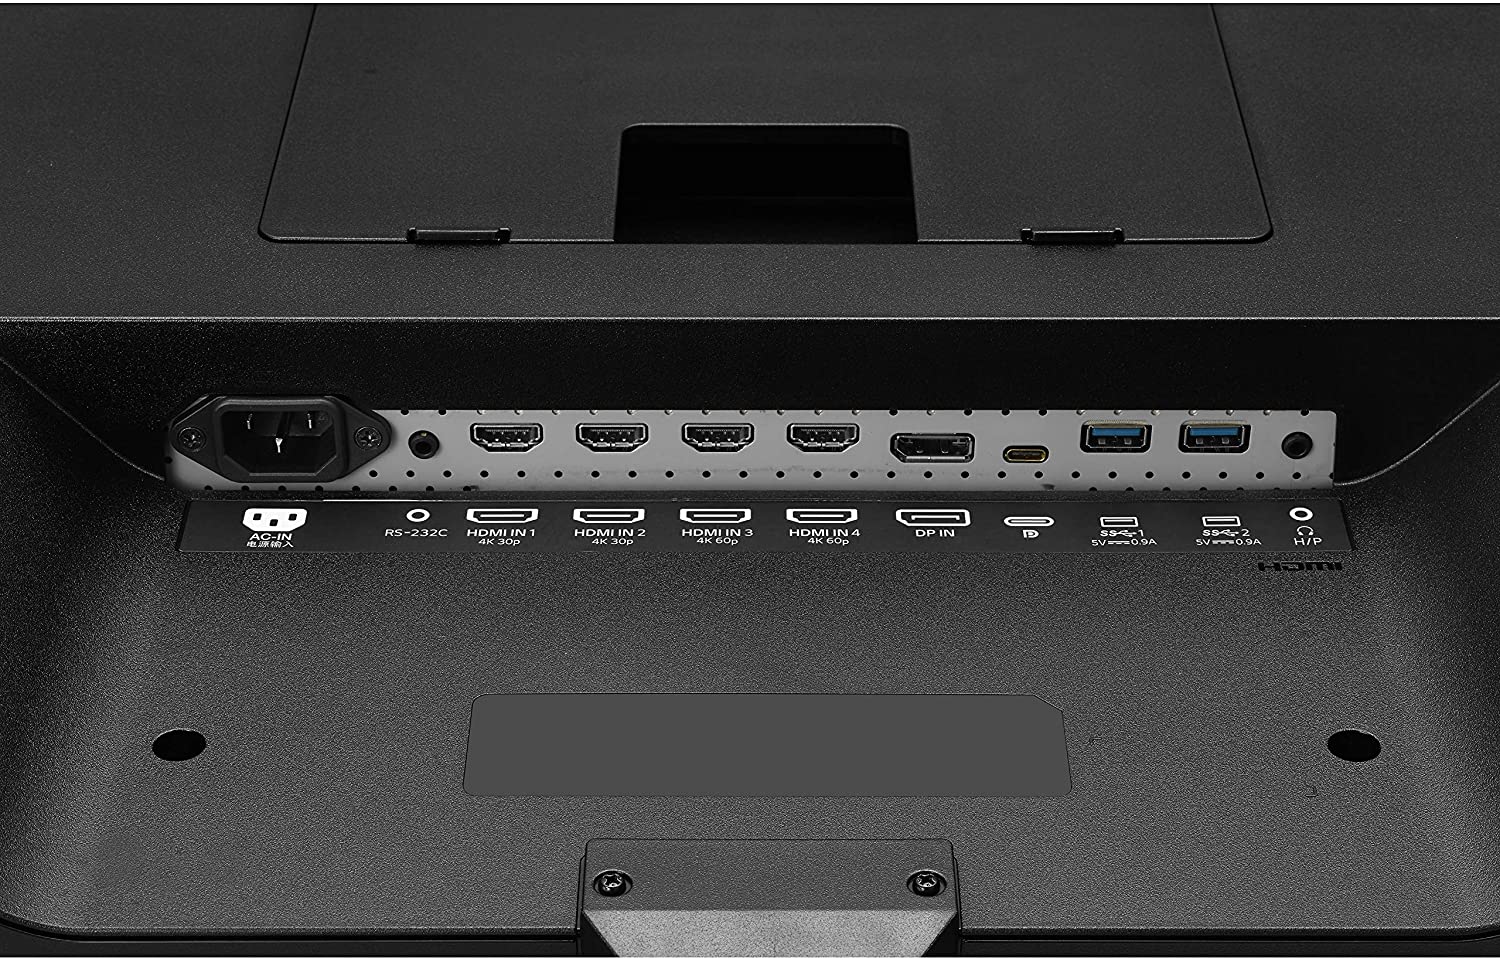 LG 43UN700-B 43 Inch Class UHD IPS Display with USB Type-C